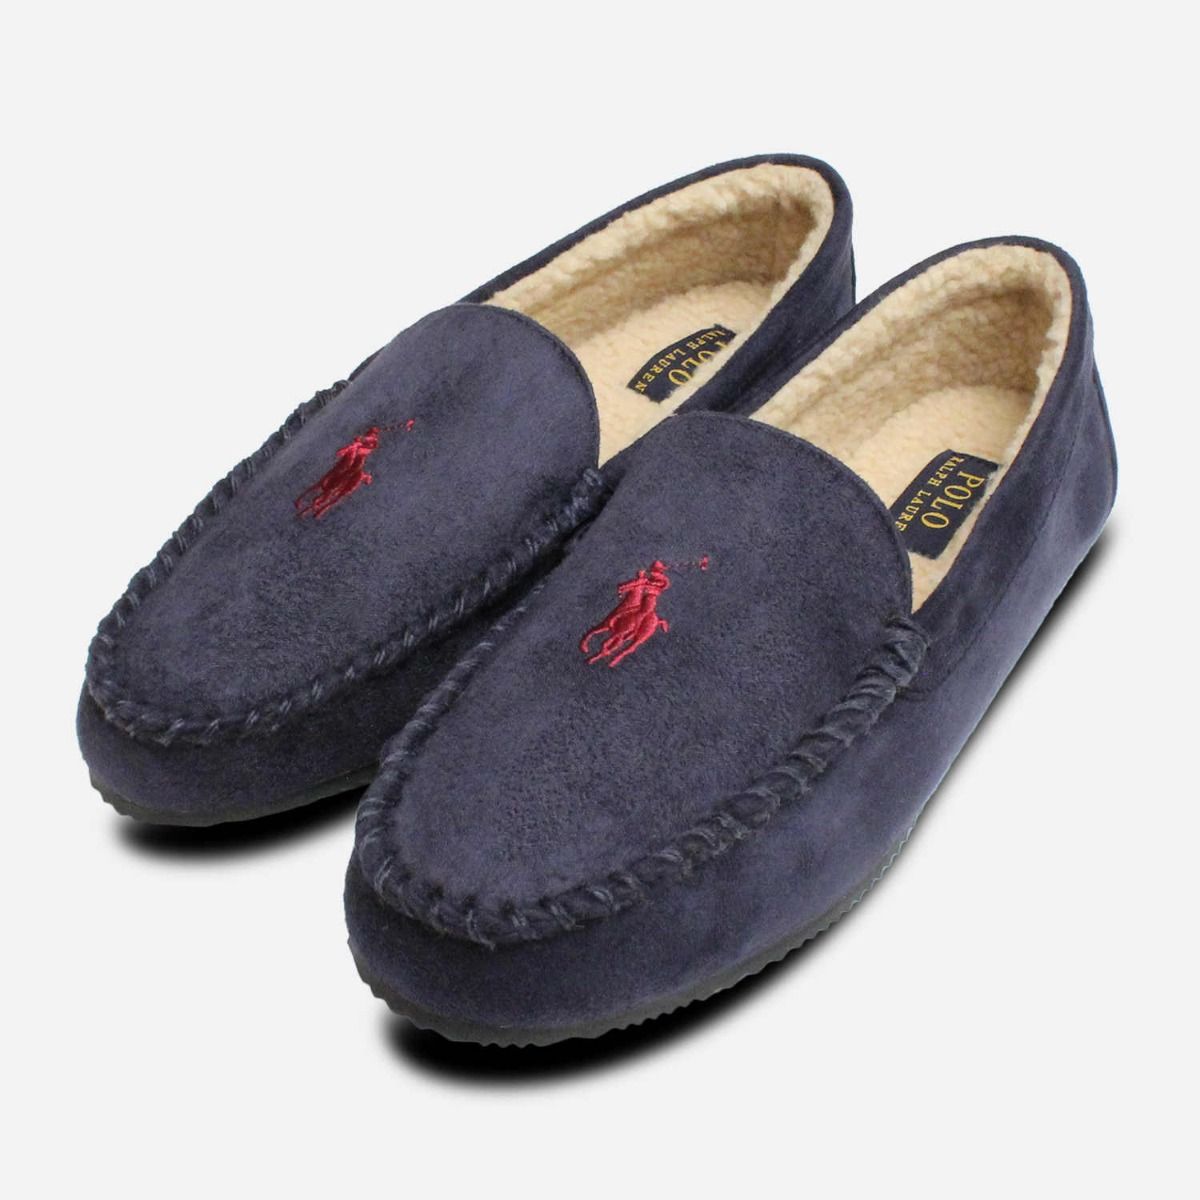 dezi slippers